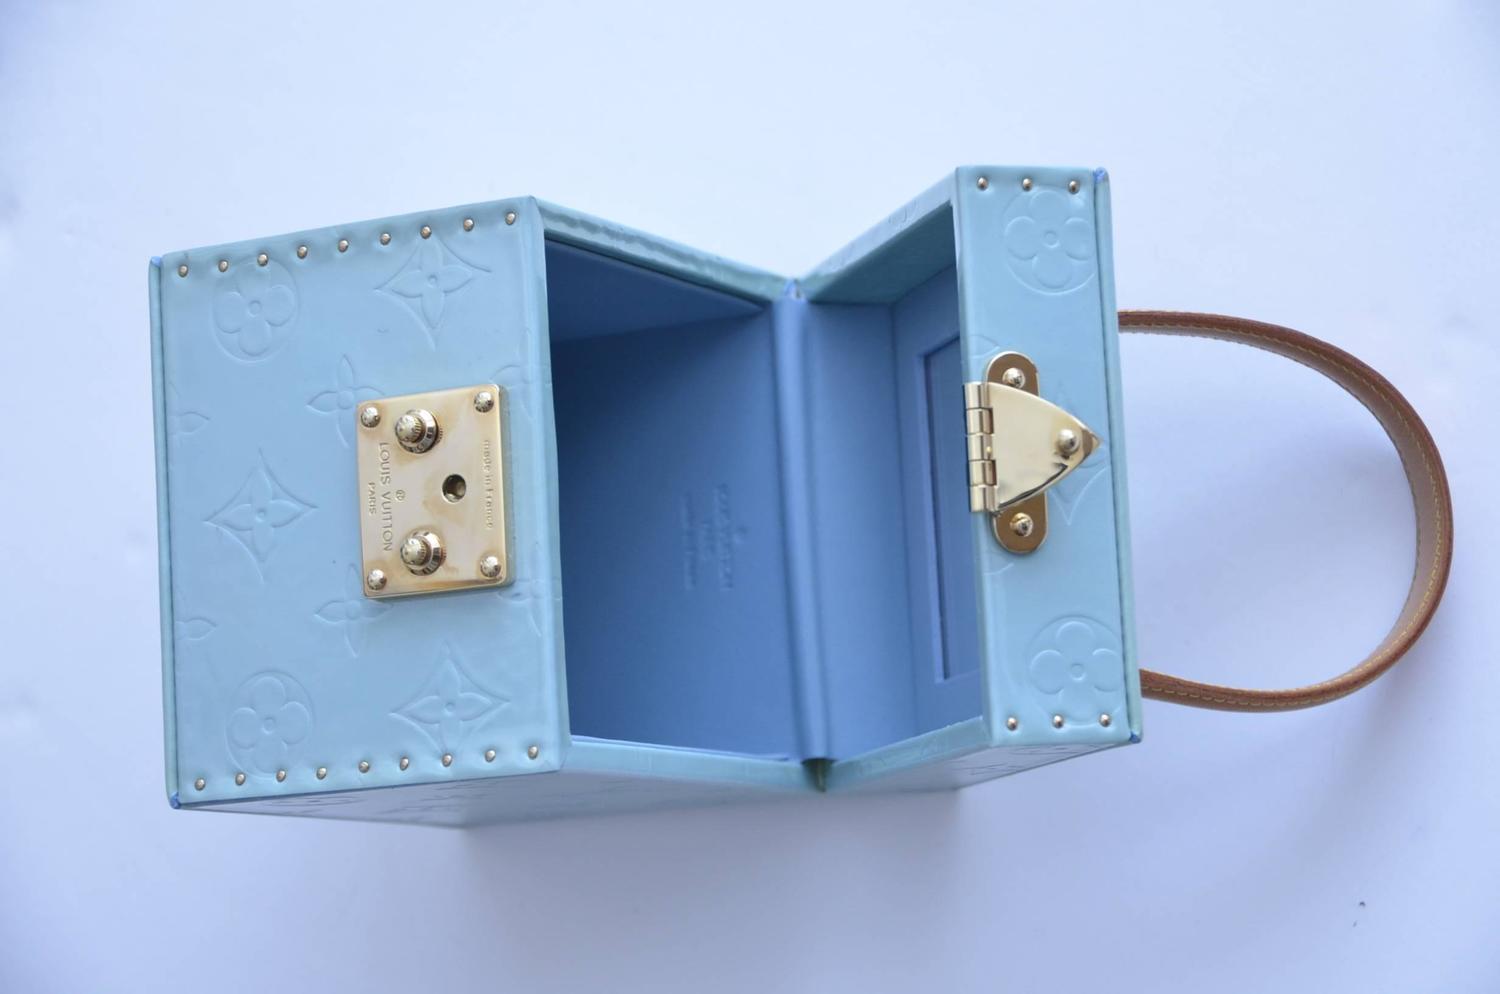 Louis Vuitton Vernis Bleecker Mini Trunk Clutch Box Mini Bag For Sale at 1stdibs